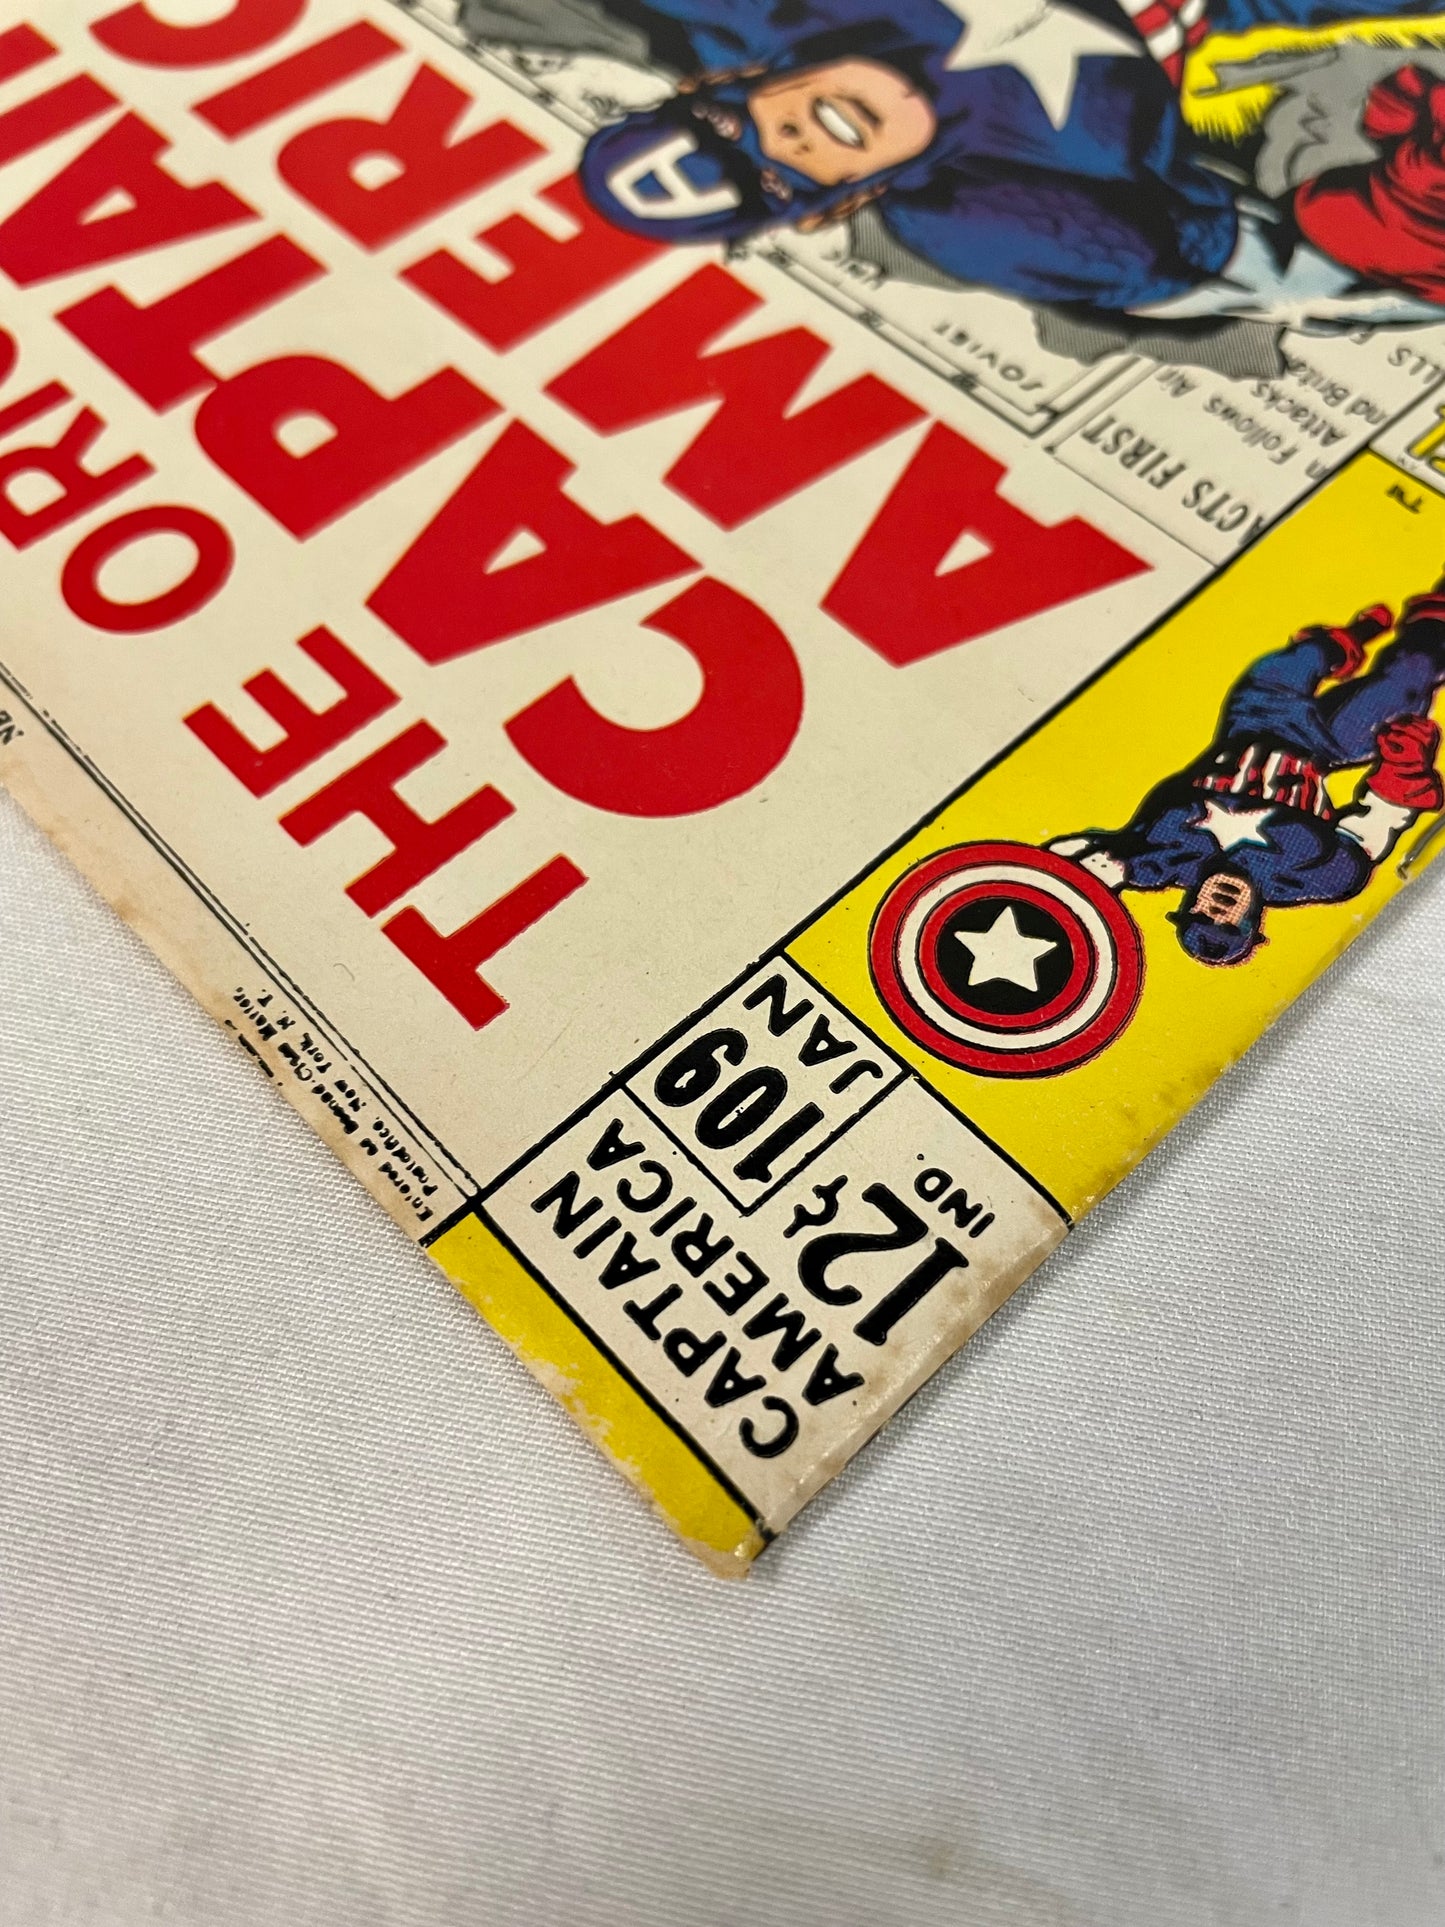 Marvel Comics Captain America #109